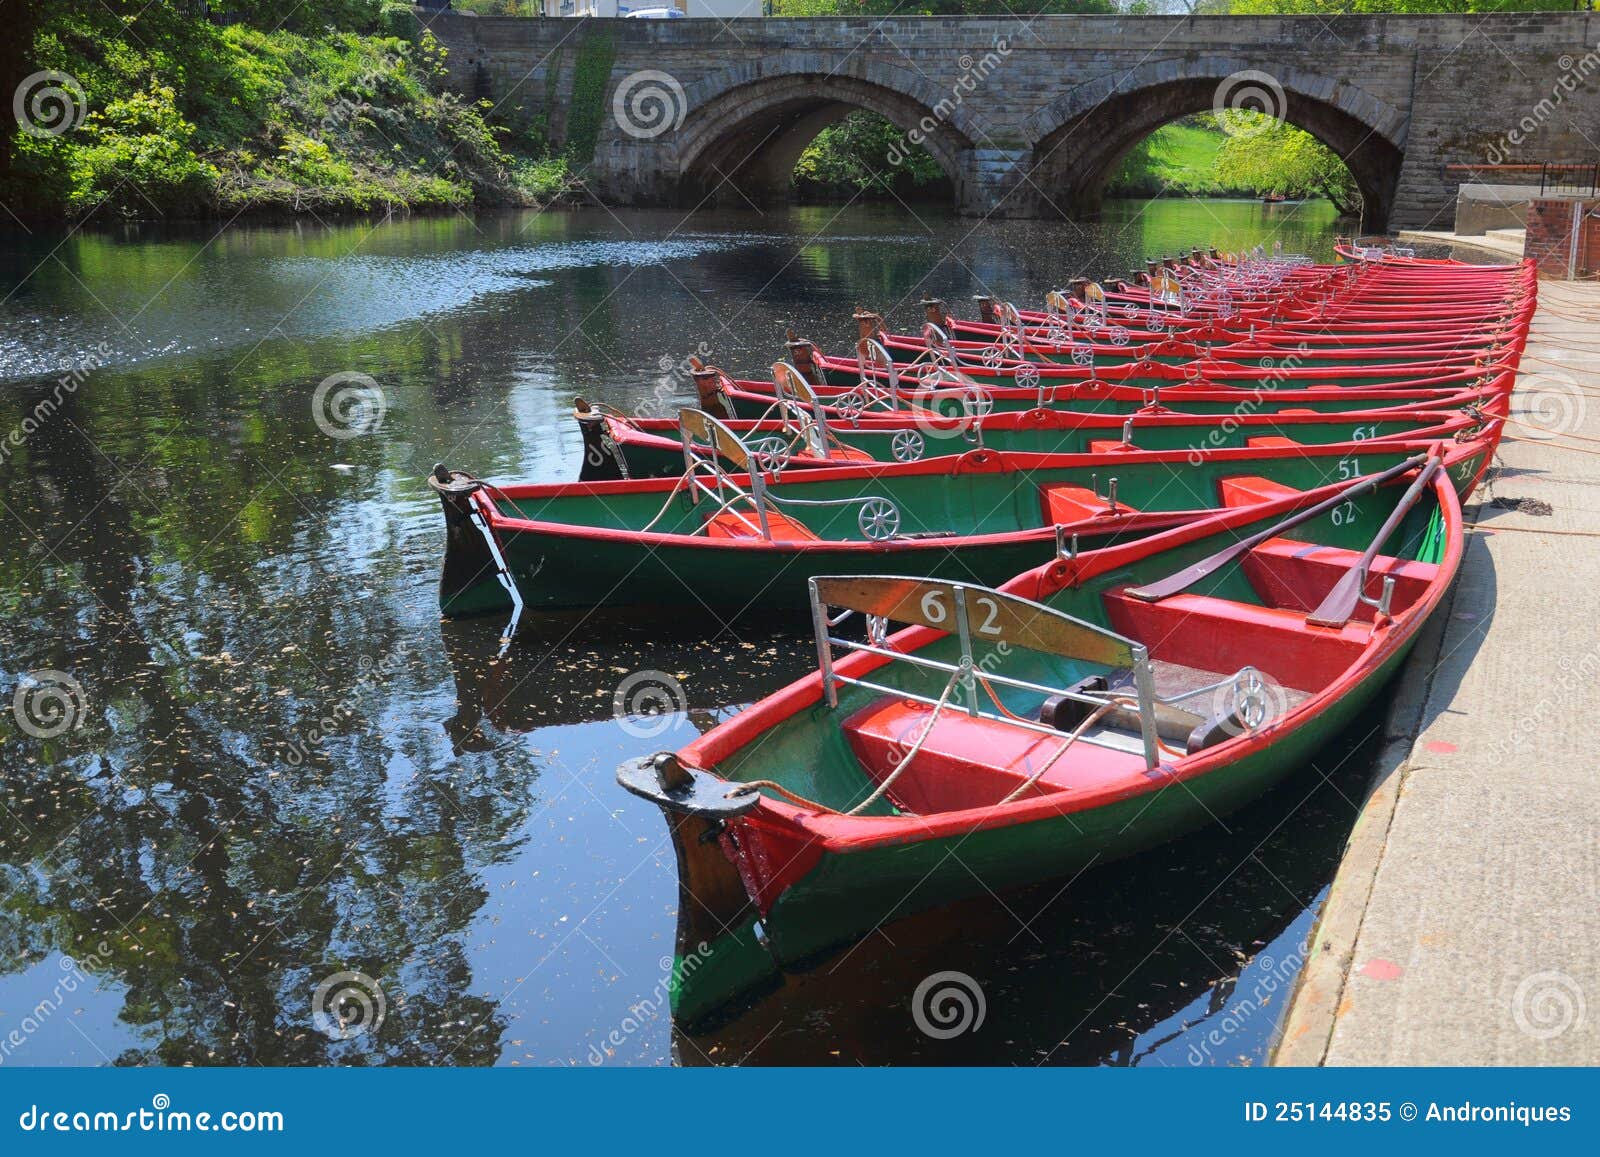 hire boats & bridge, river nidd, knaresborough, uk stock